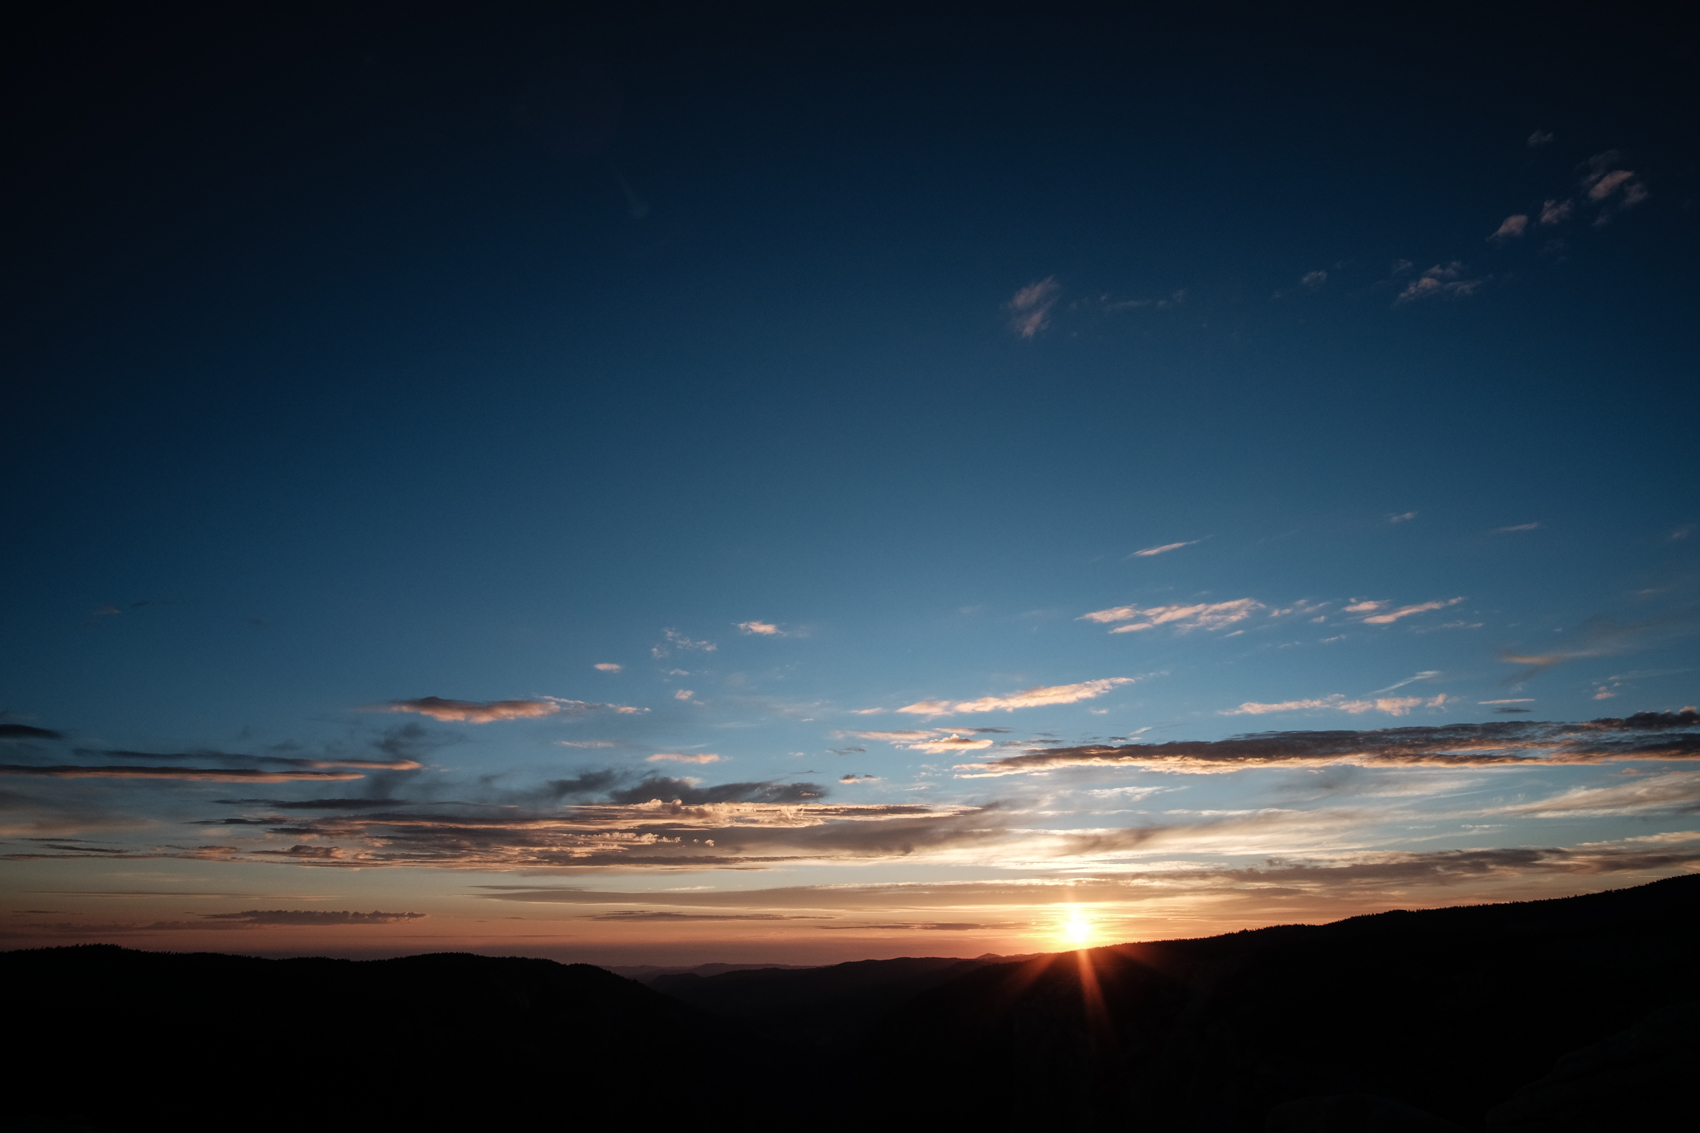  Sunset in Yosemite National Park, California. August 2015. 